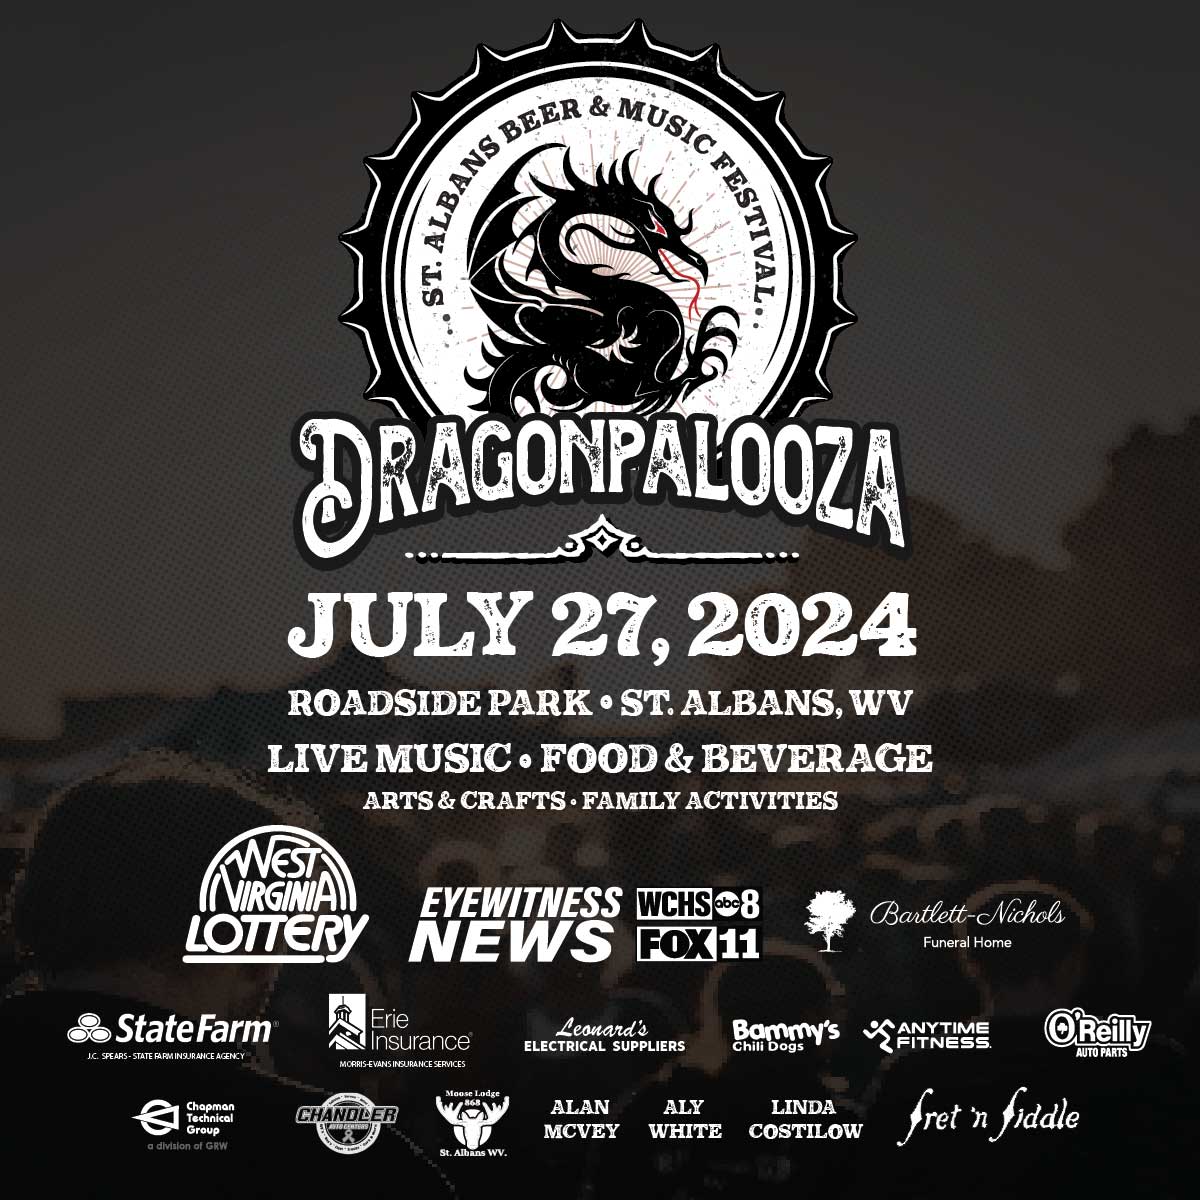 Dragonpalooza - St. Albans Beer & Music Festival - July 27, 2024 - Roadside Park - St. Albans, WV